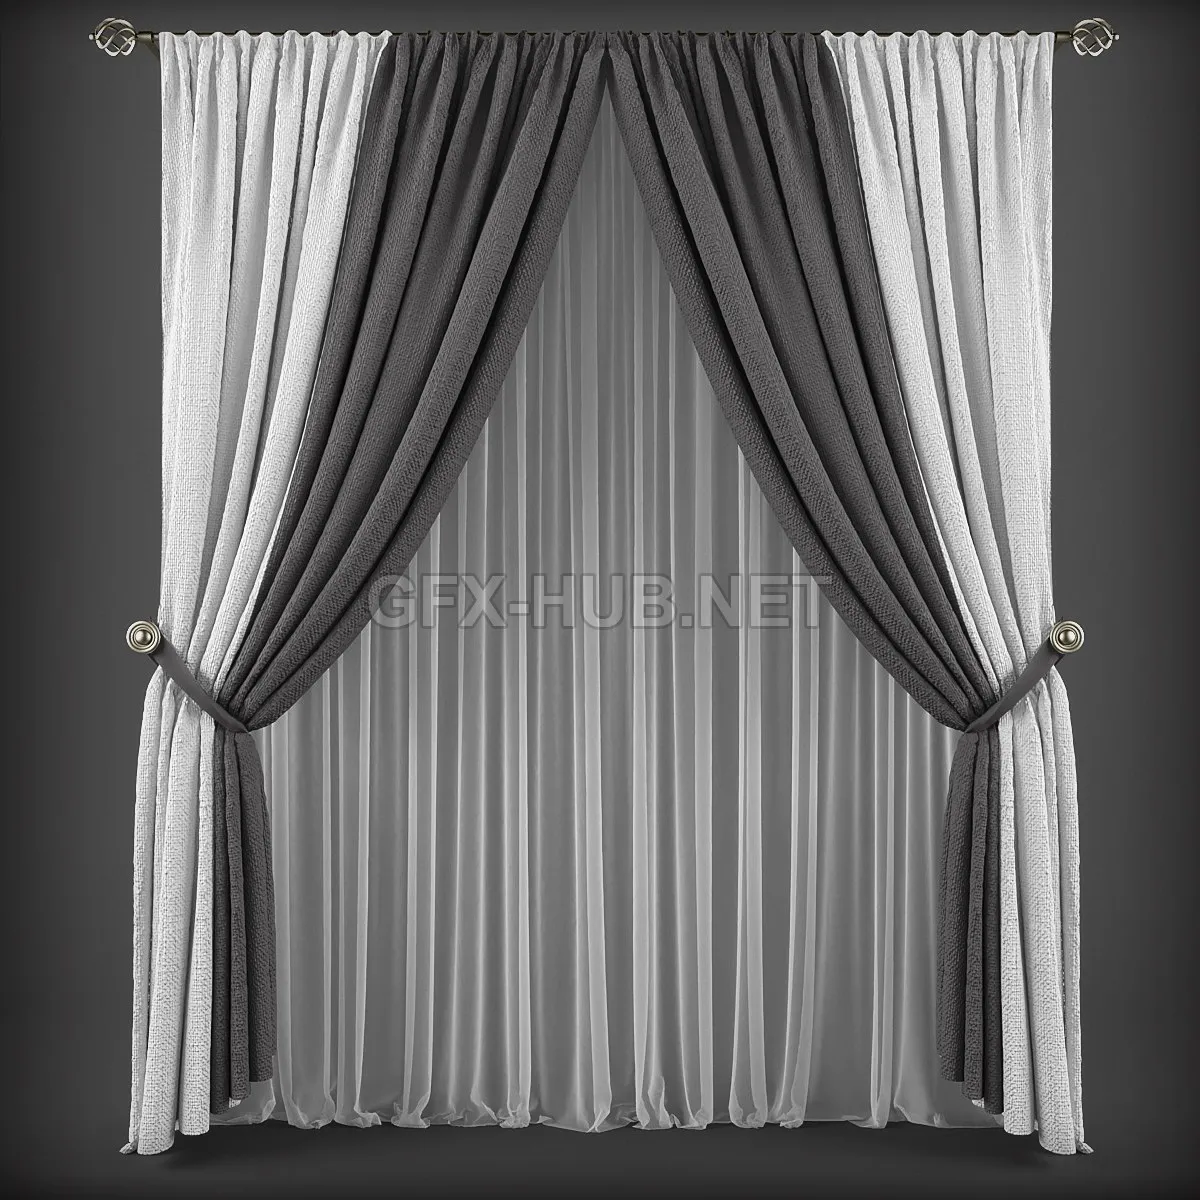 FURNITURE 3D MODELS – Curtains 194